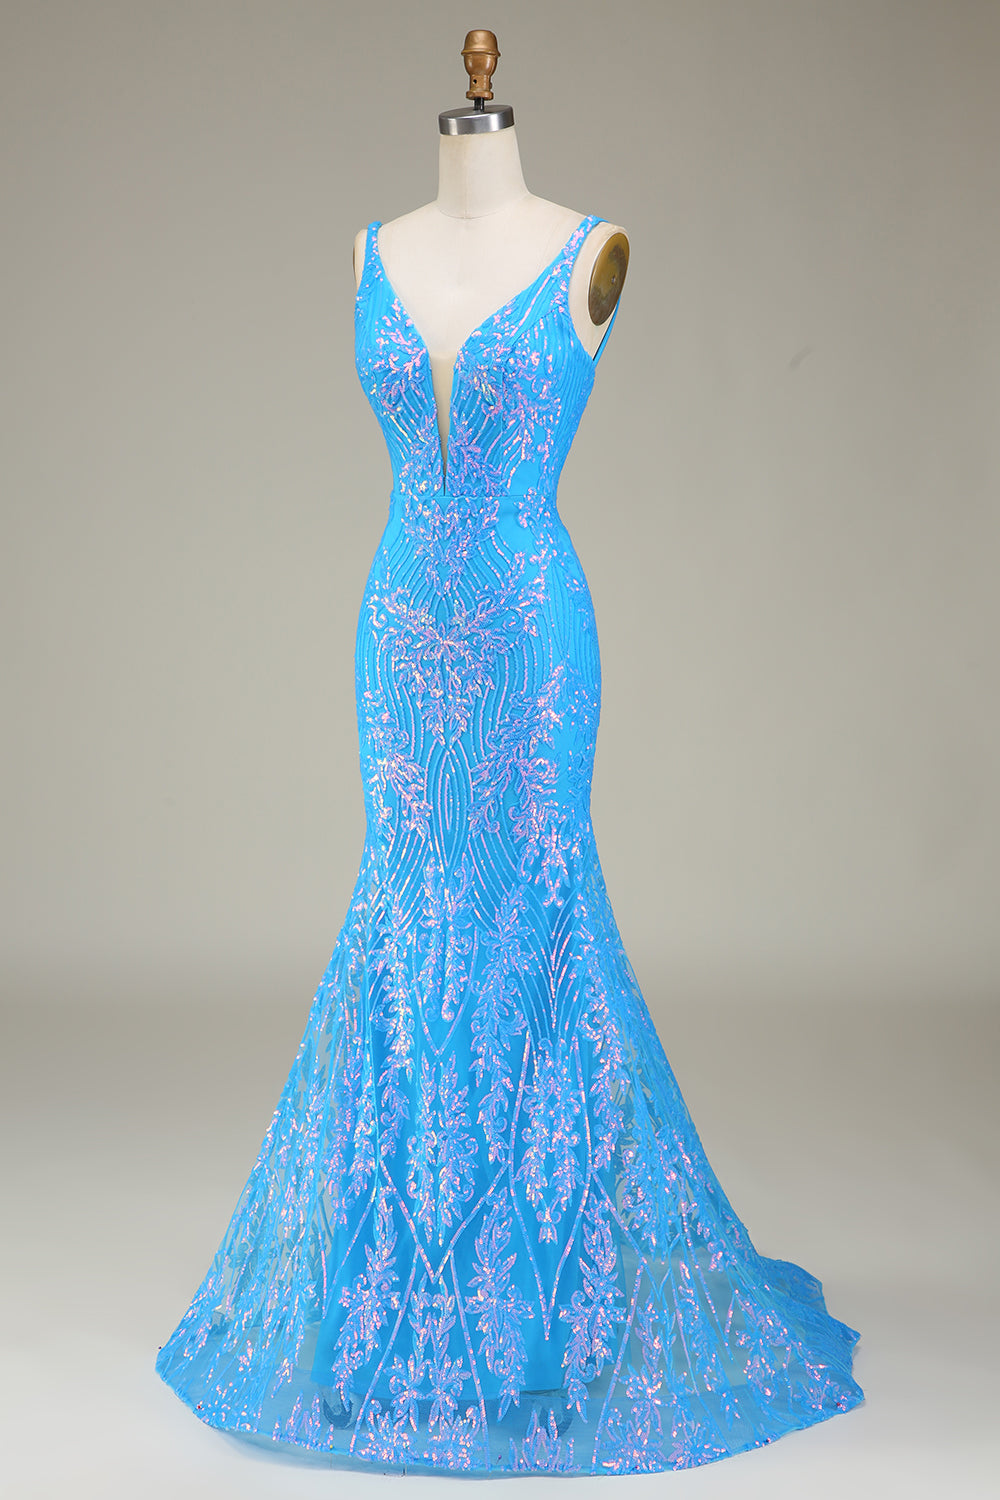 Zapakasa Women Sparkly Blue Deep V Neck Mermaid Prom Dress 4947